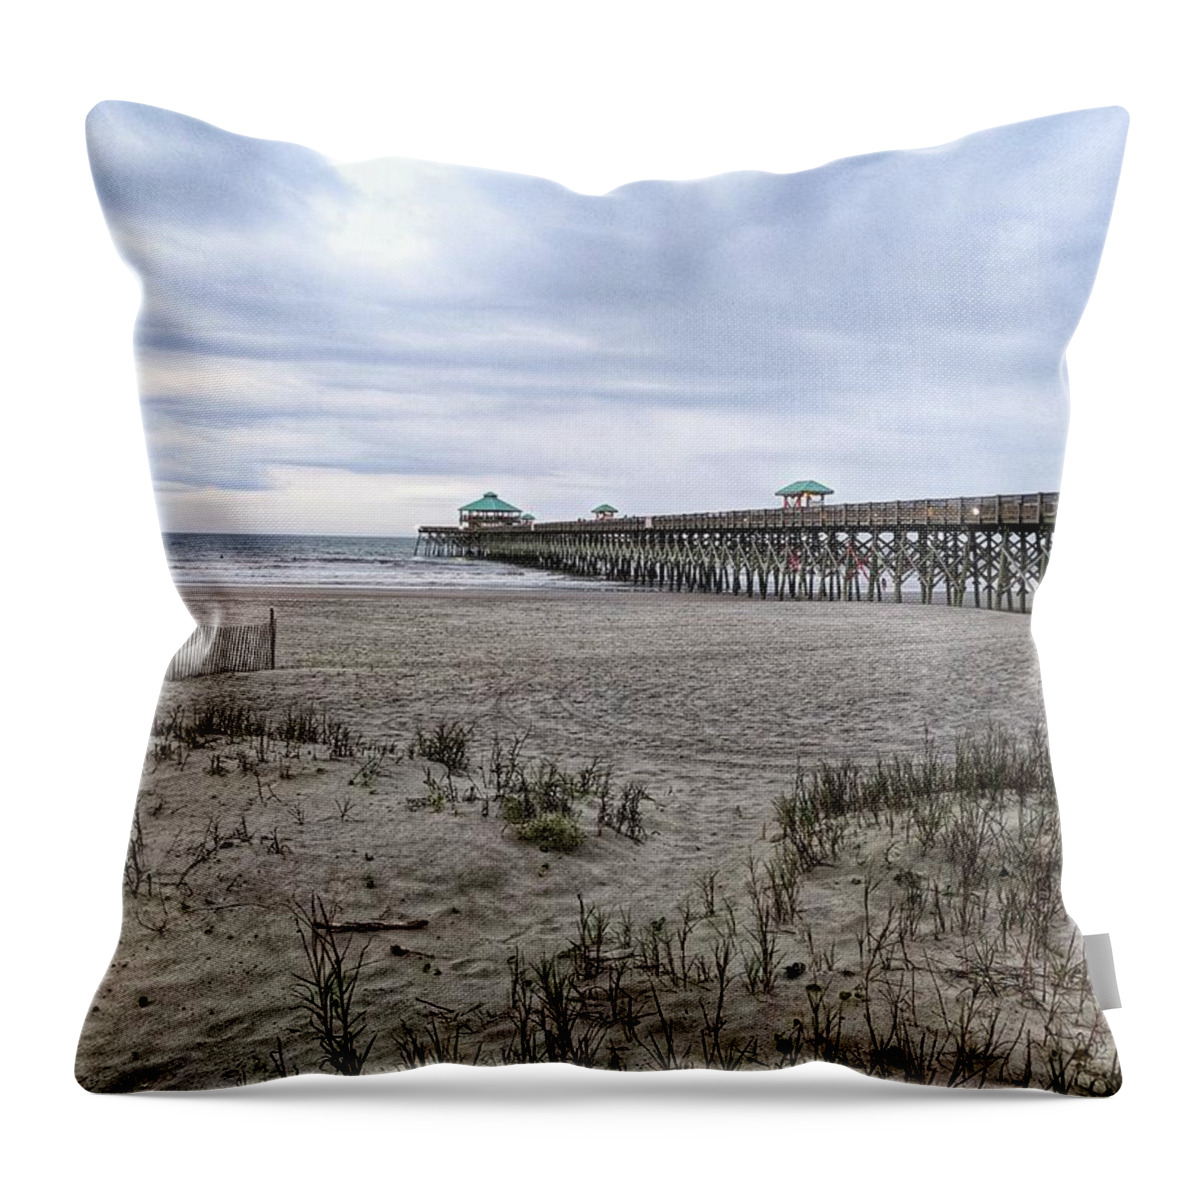 Cloudy Throw Pillow featuring the photograph Rainy Beach Day by Portia Olaughlin